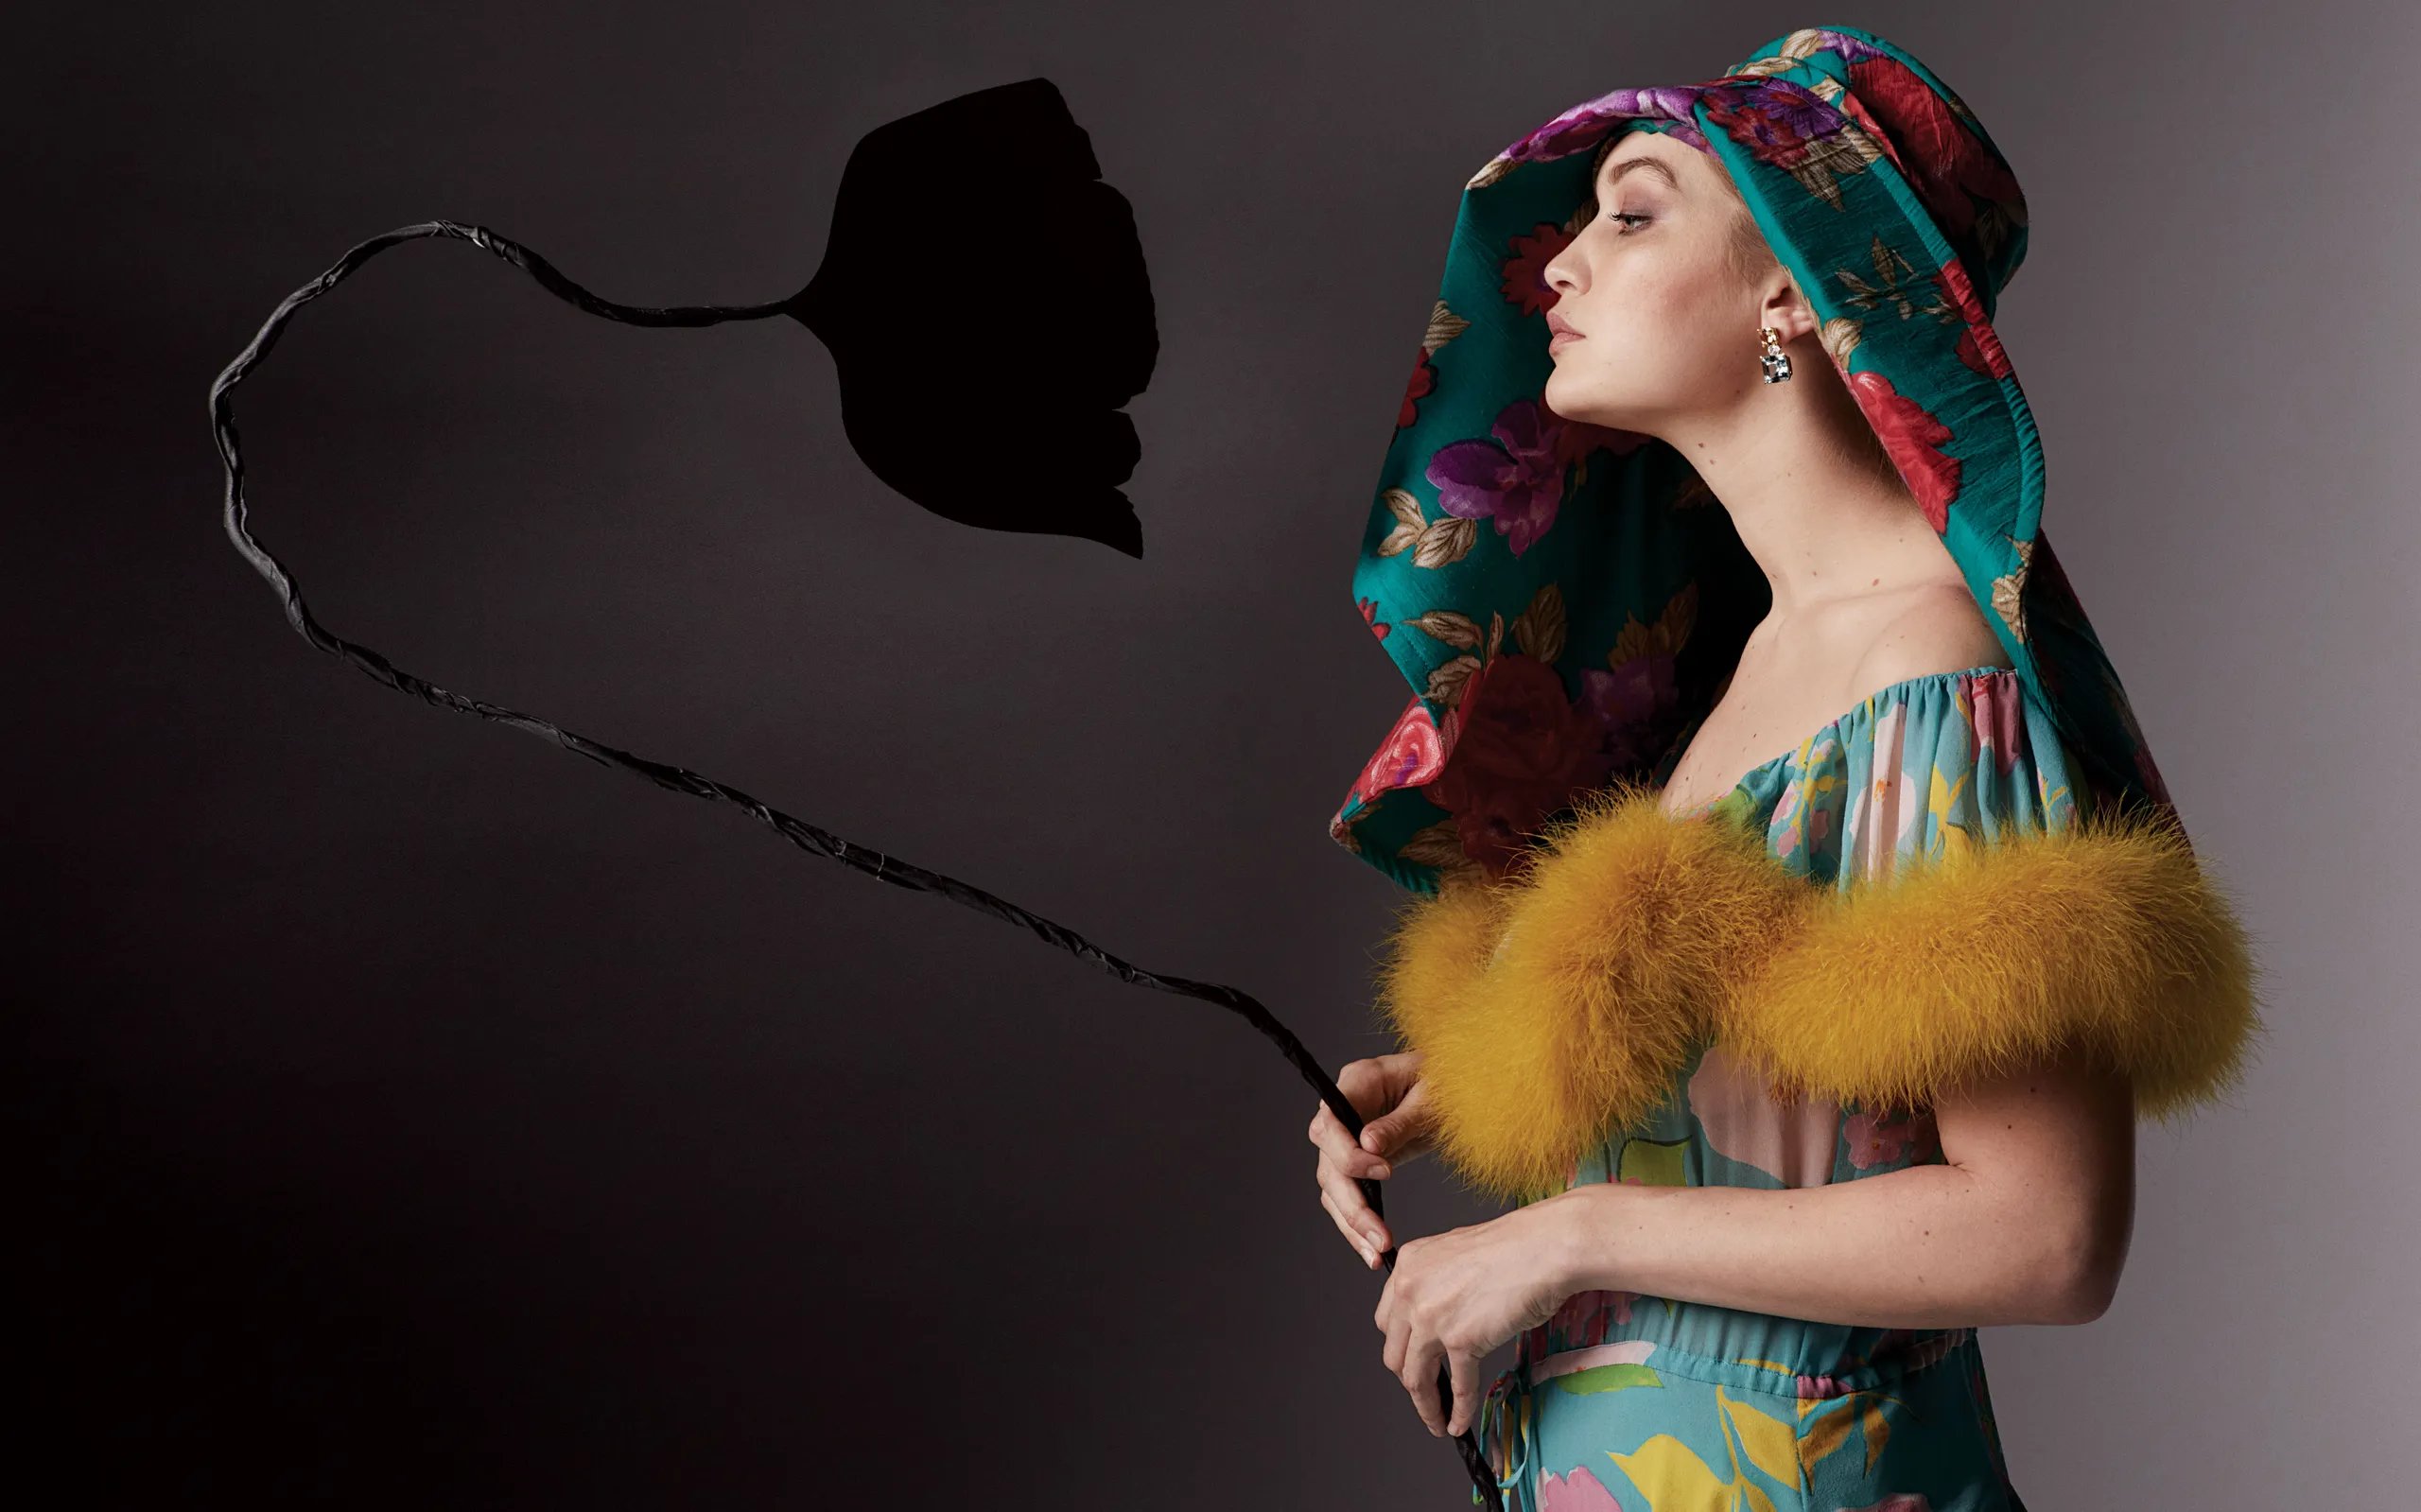 Photos n°3 : Gigi Hadid is Back in Vogue!